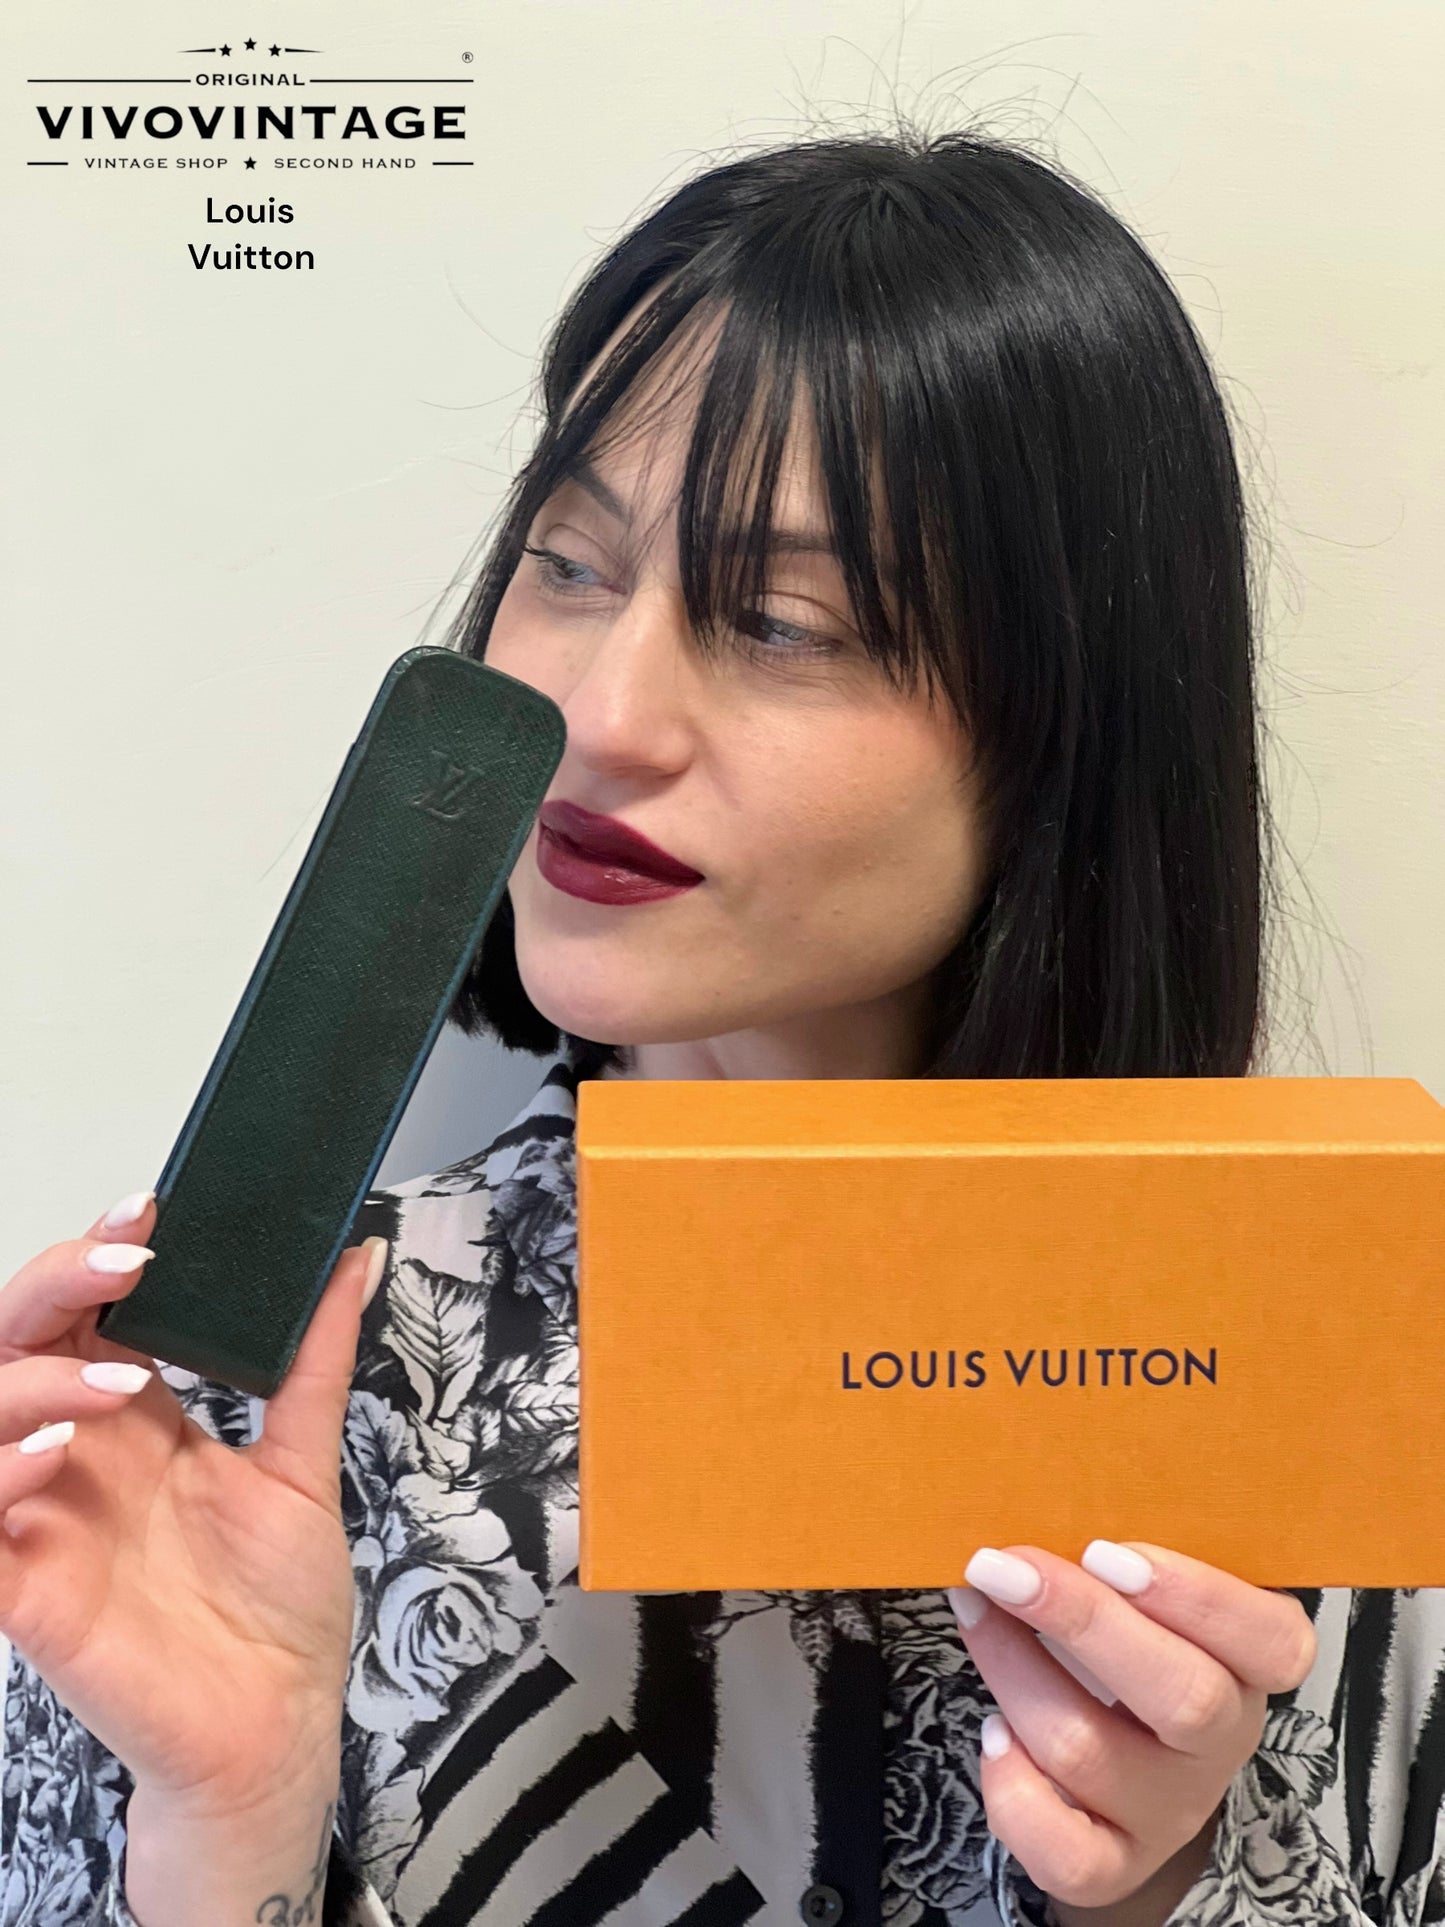 Set penna Louis Vuitton